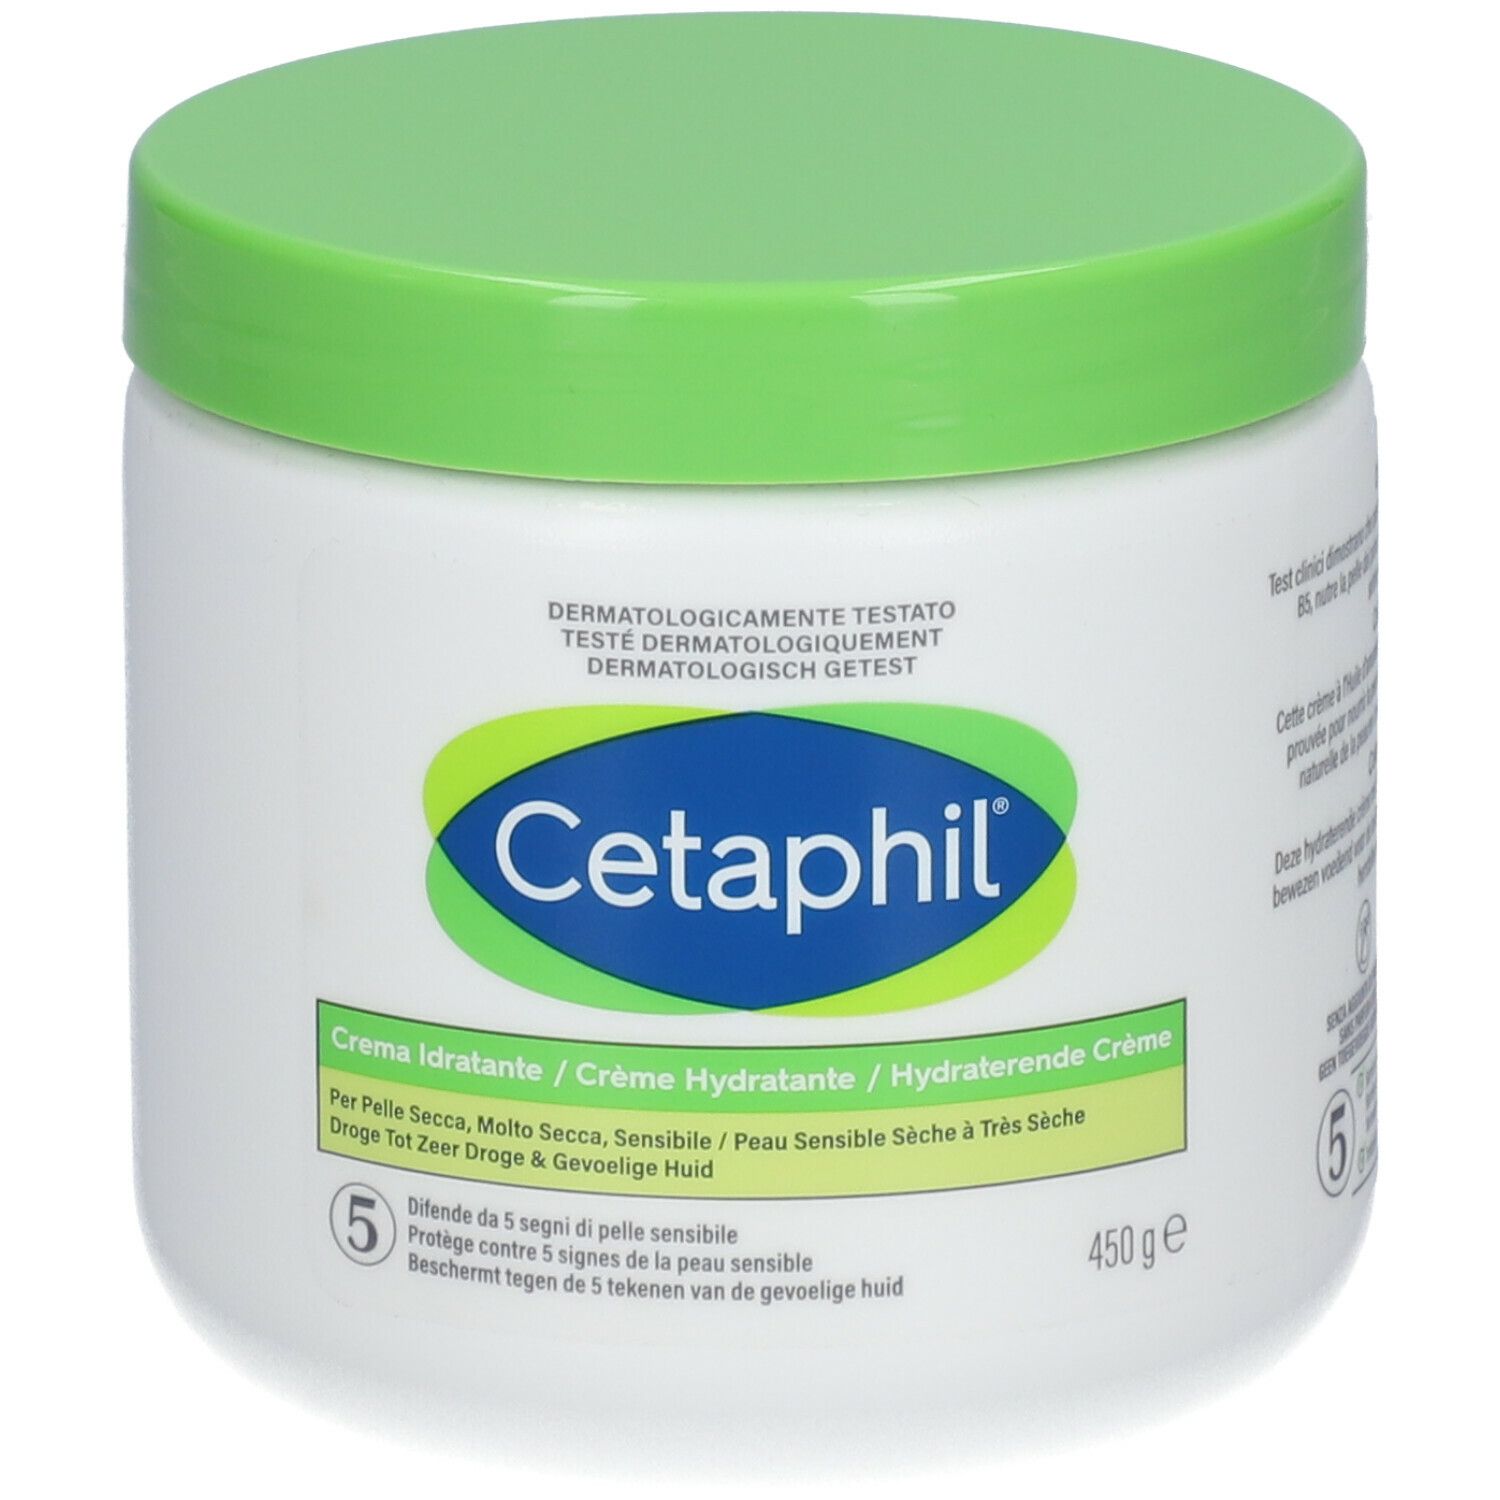 Cetaphil® Crème Hydratante 100 g - Redcare Pharmacie